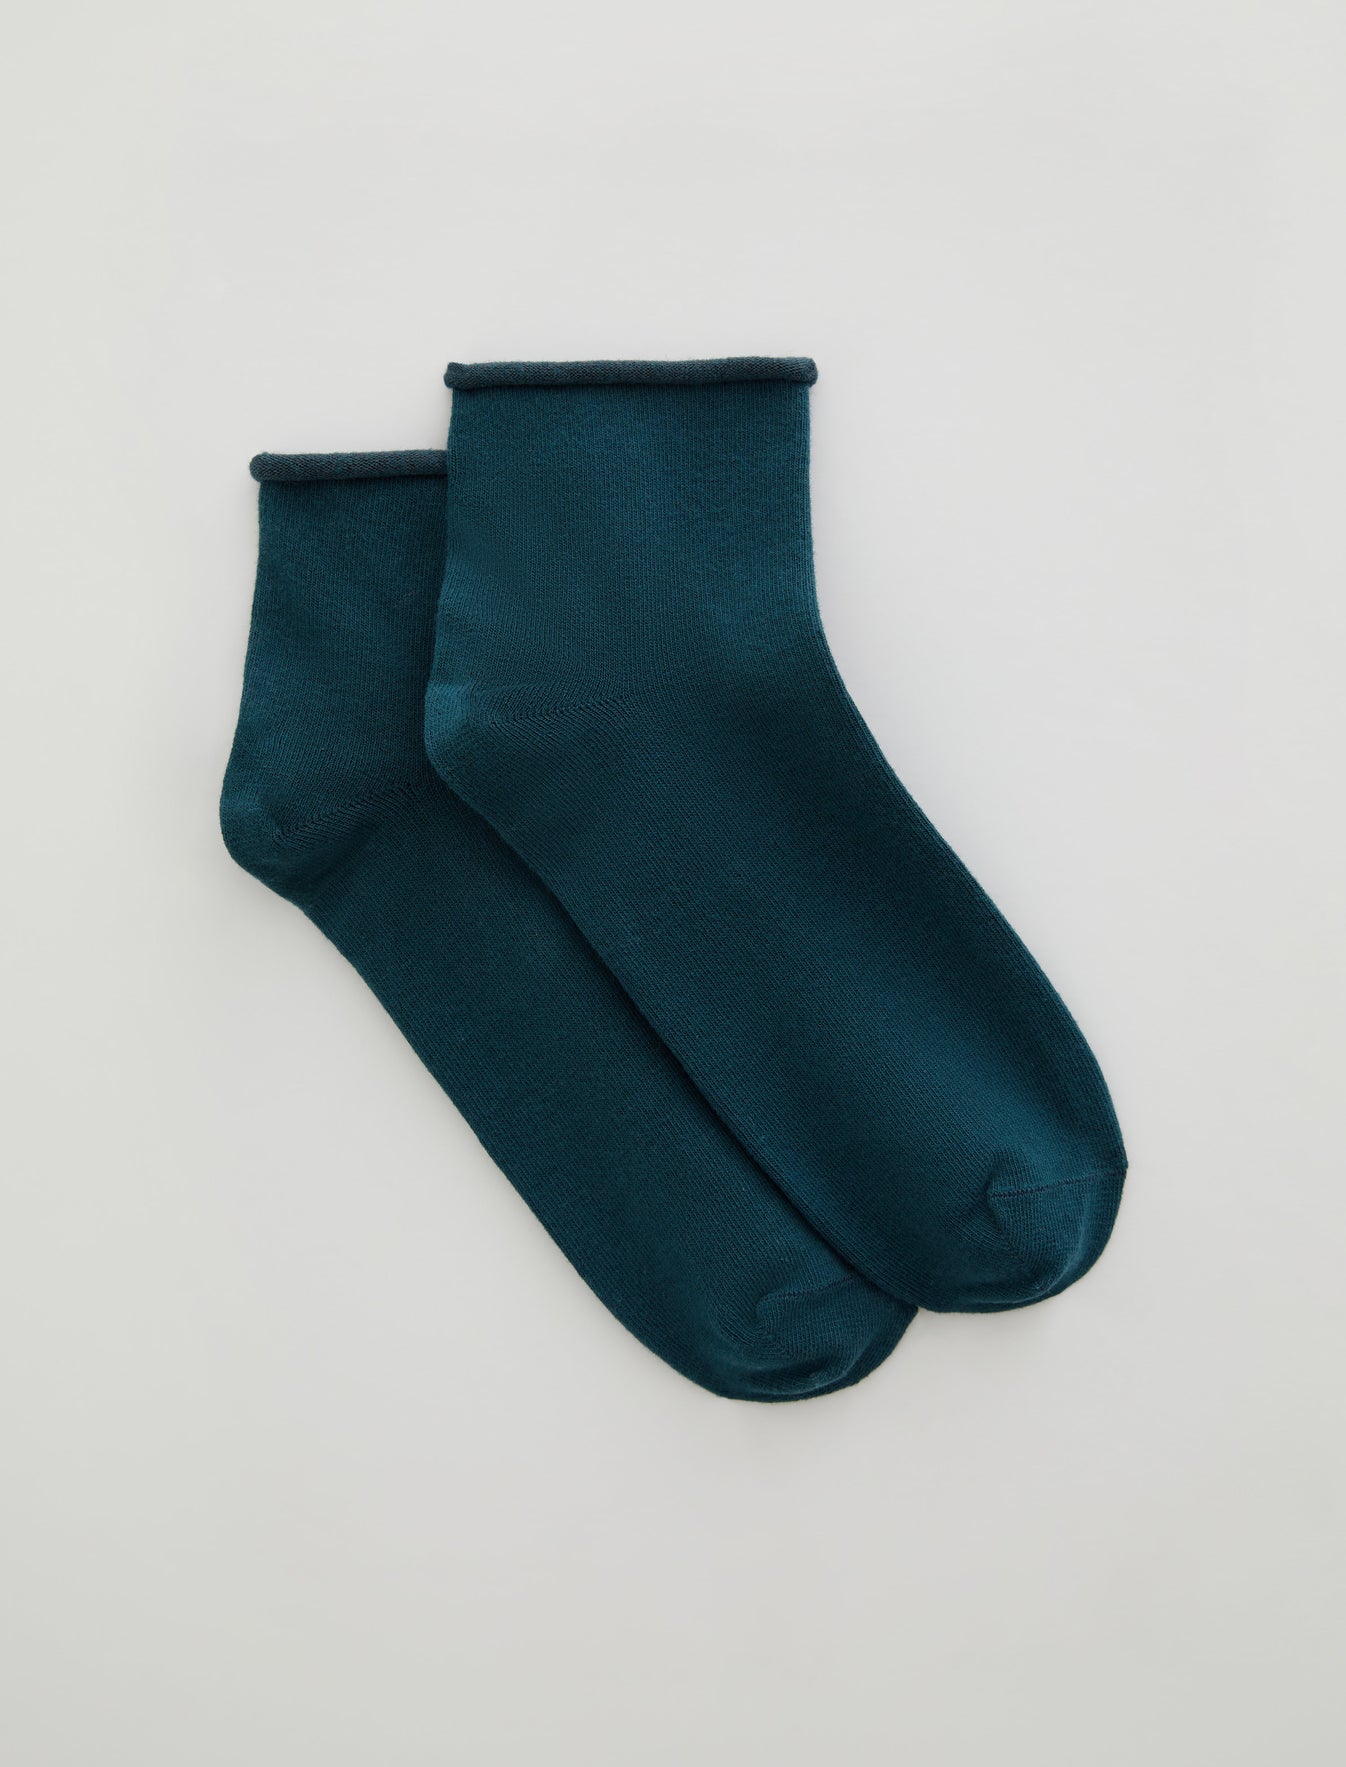 Shorty Sock|Unisex